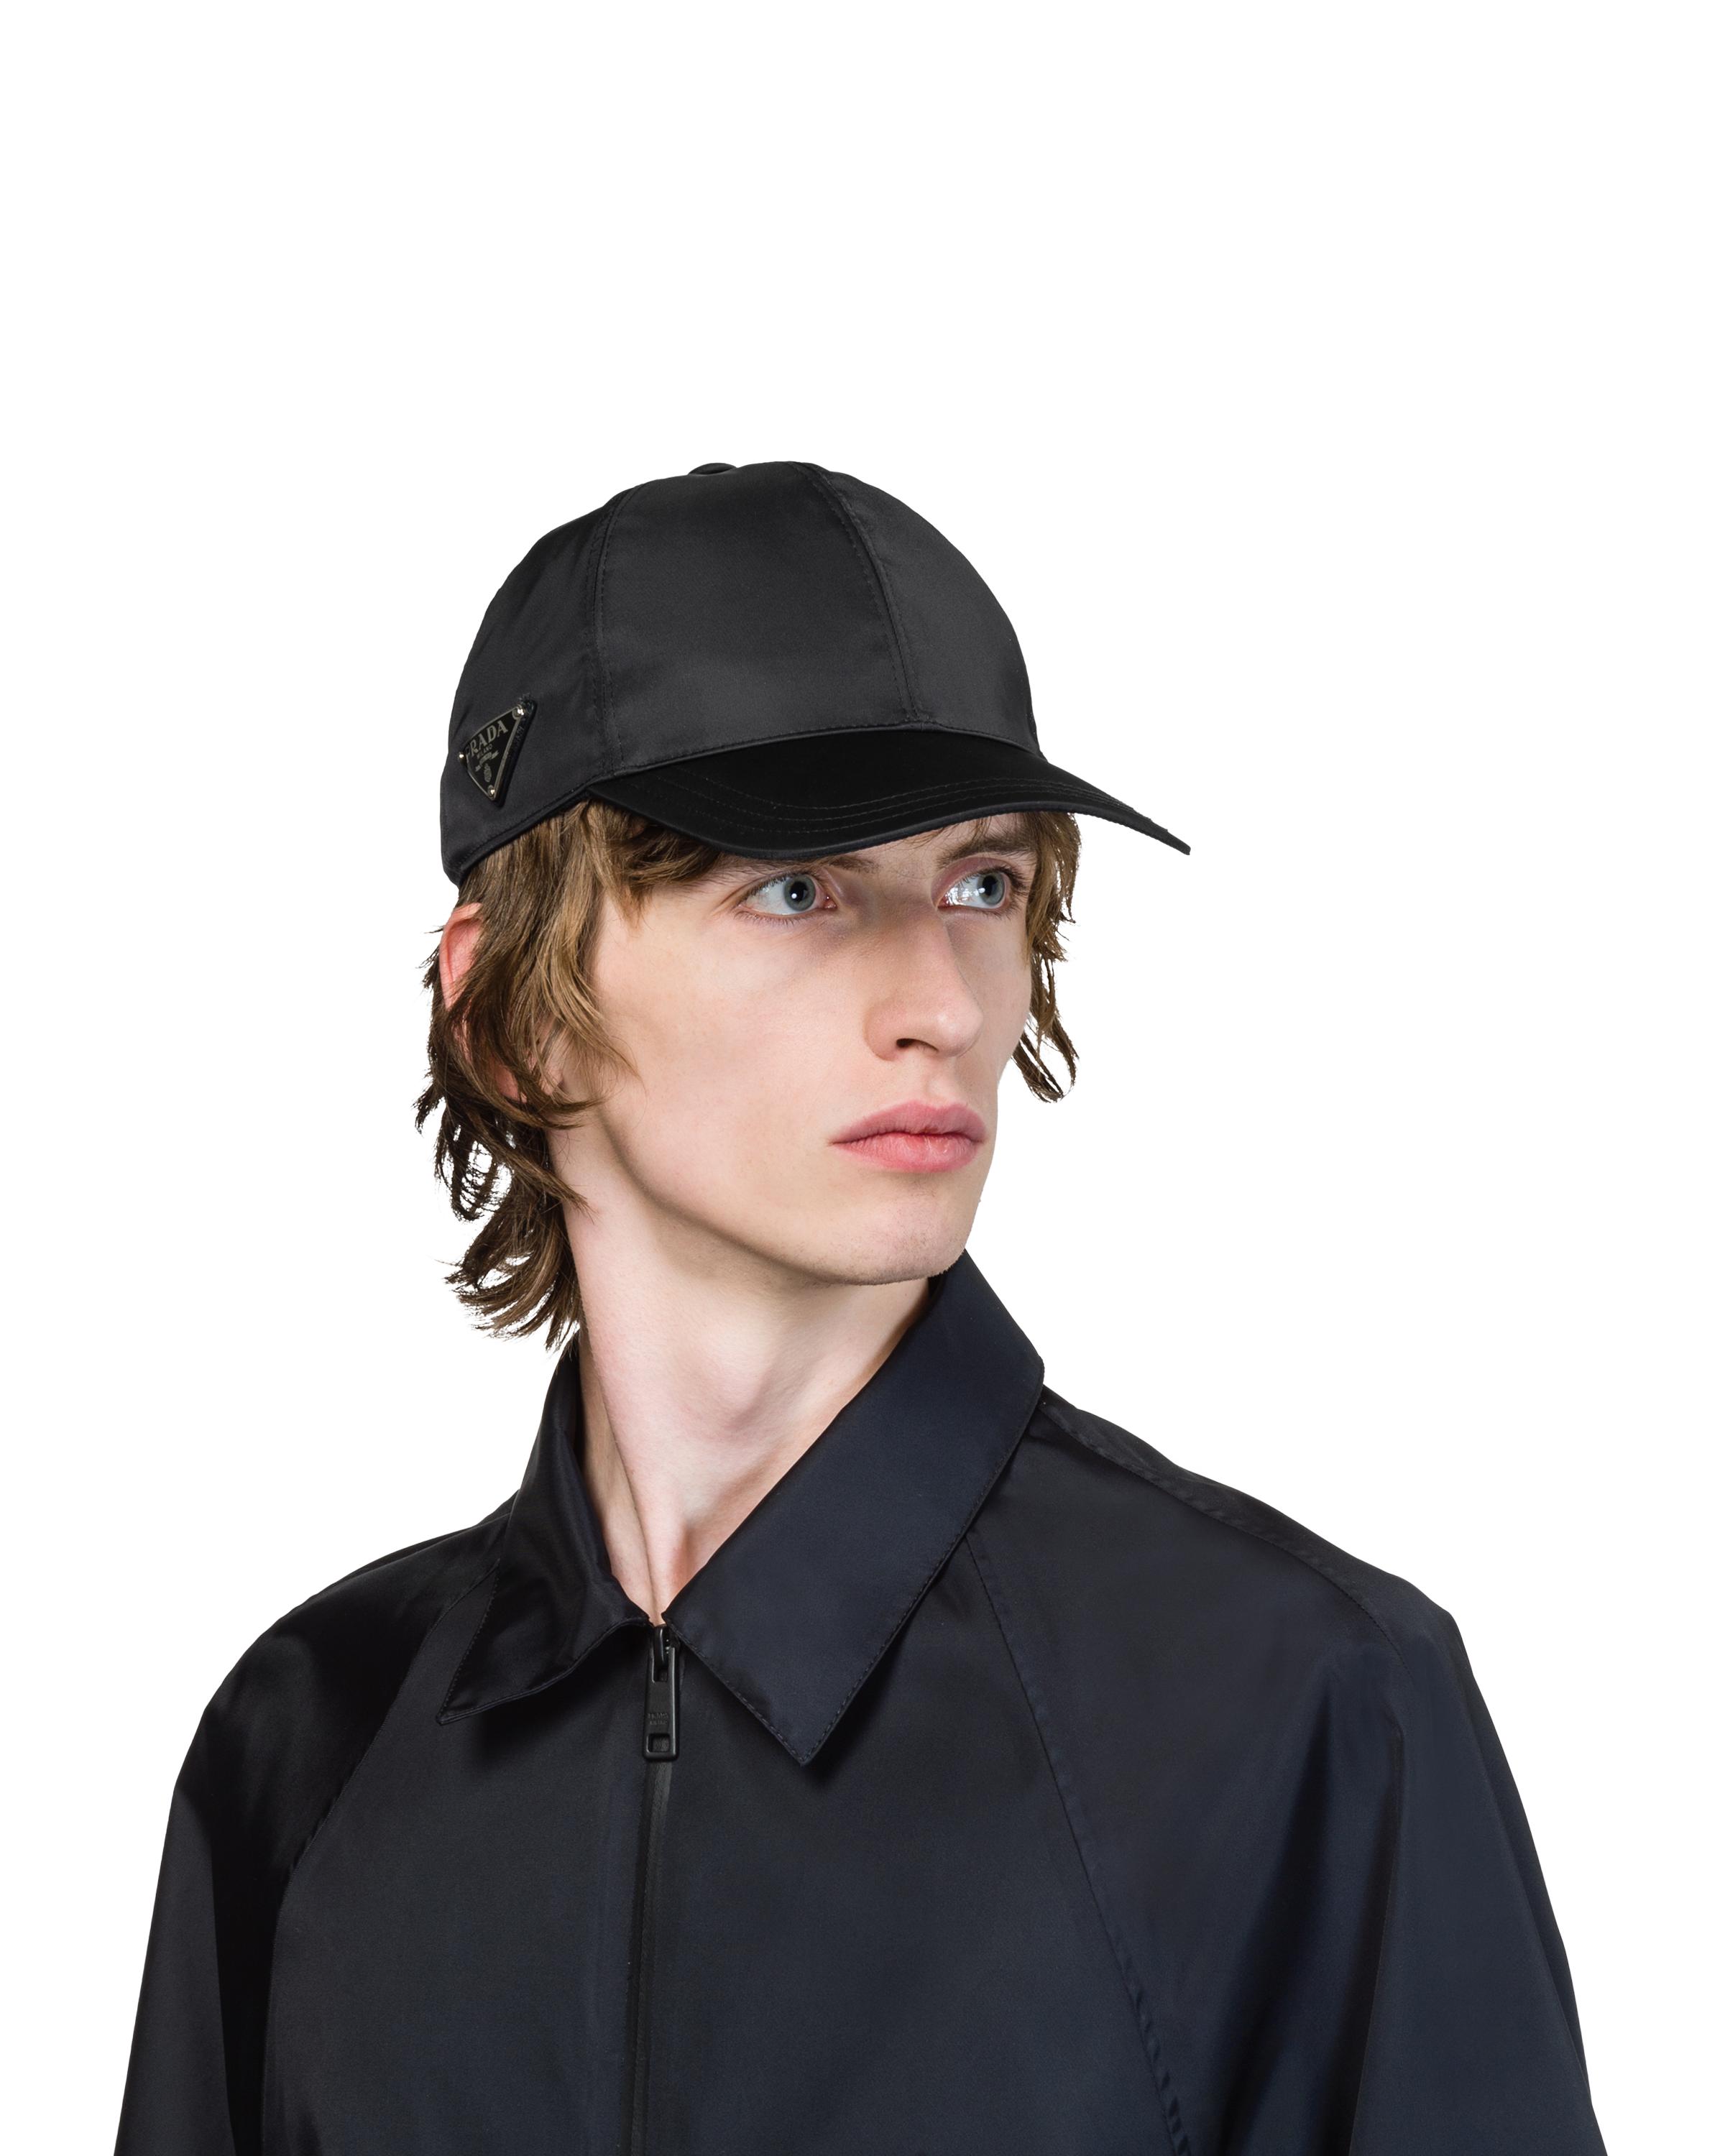 Prada Synthetic Re-nylon Baseball Cap in Black for Men - Lyst